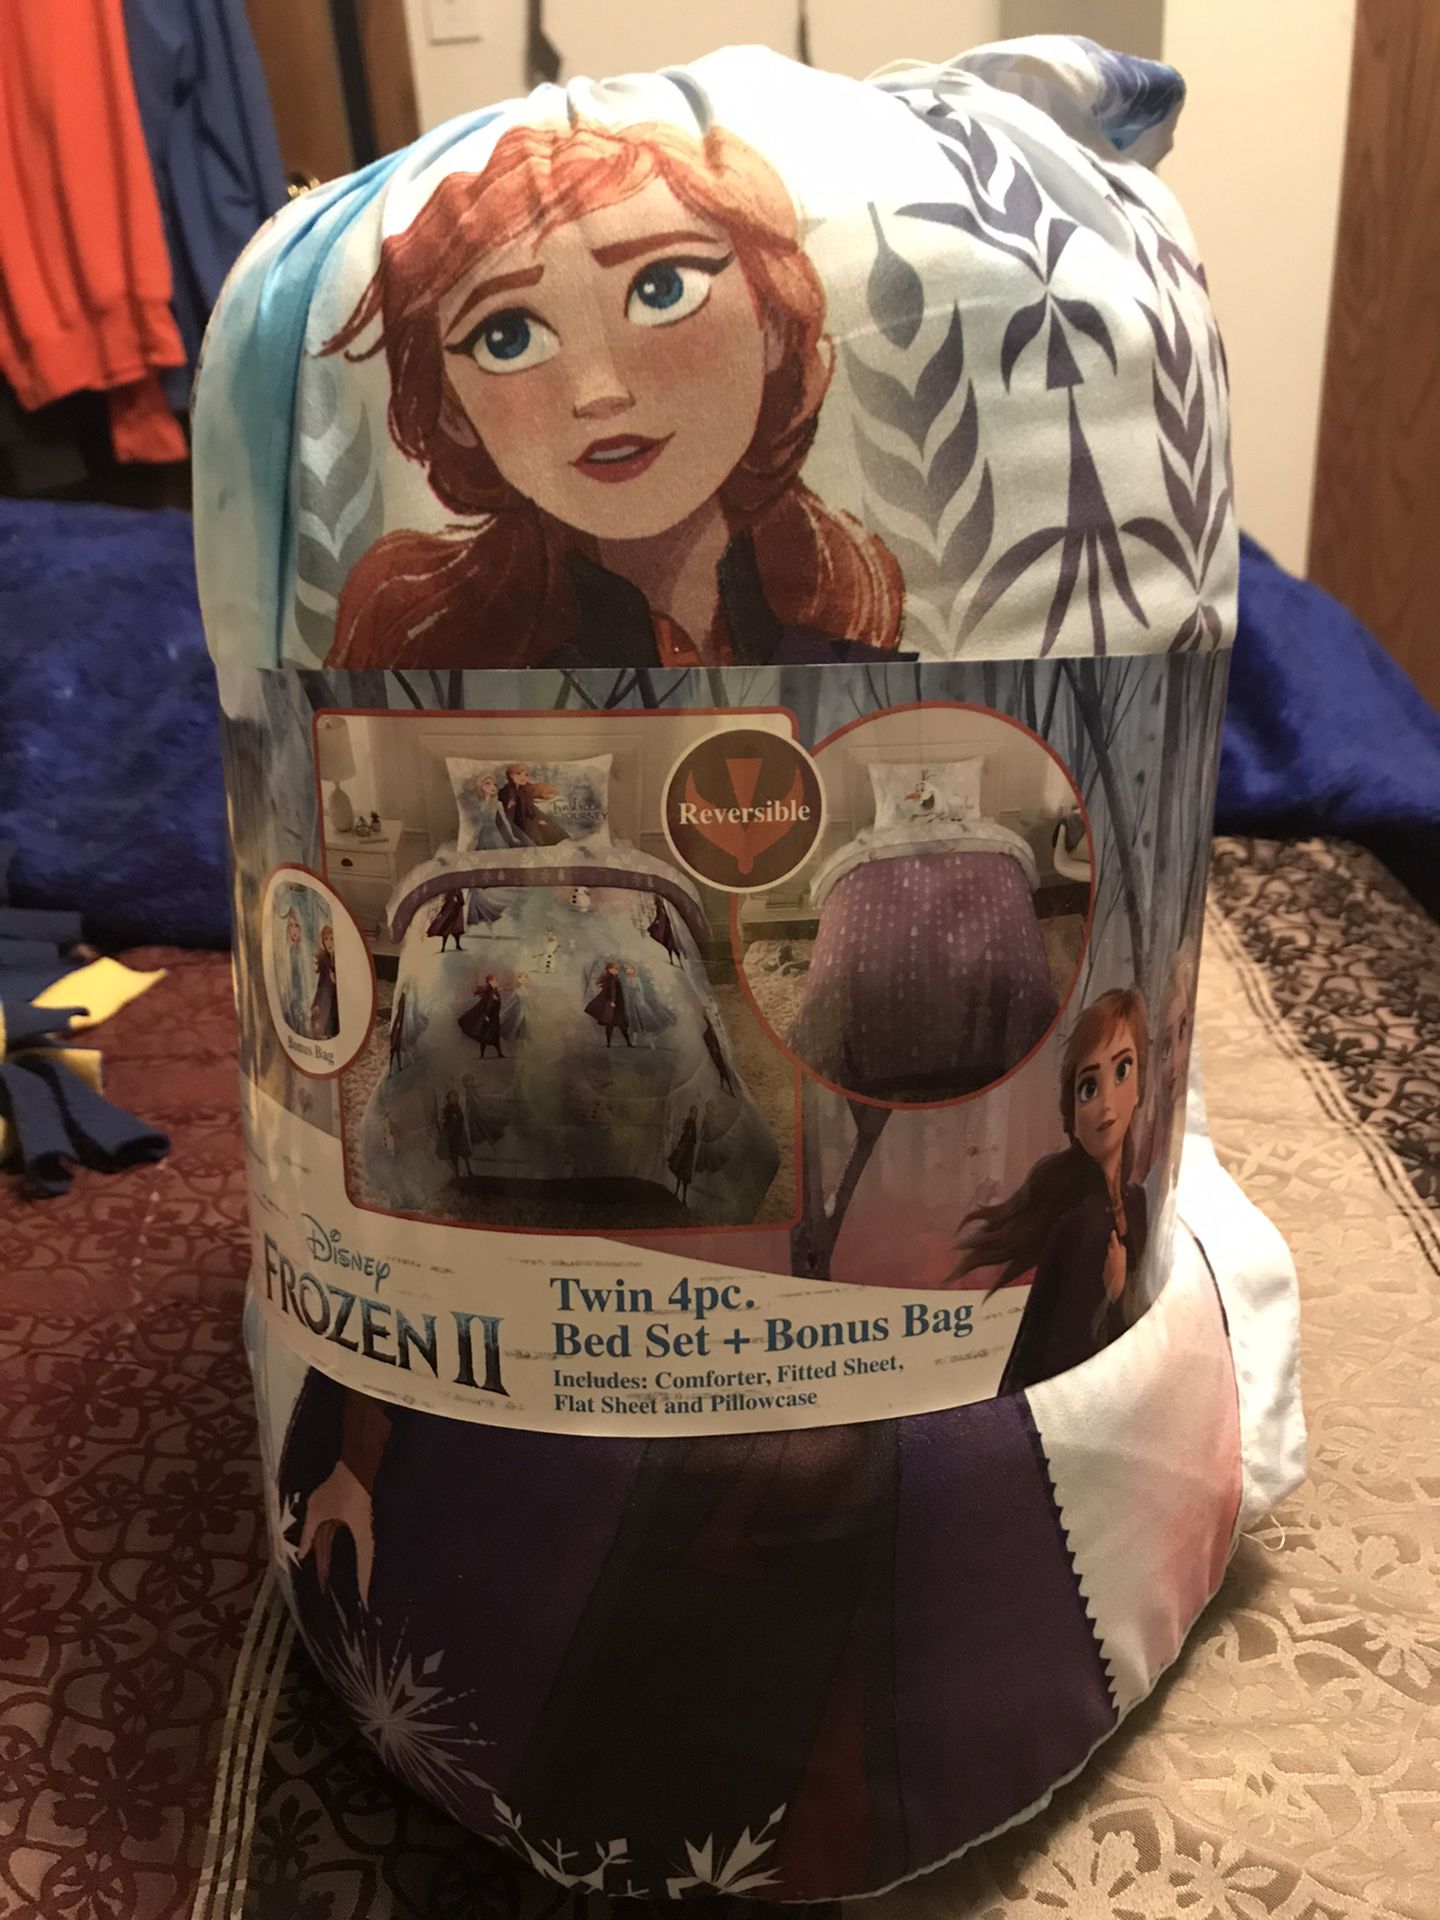 Disney Frozen II Twin 4pc. Bedding Set + Bonus Bag